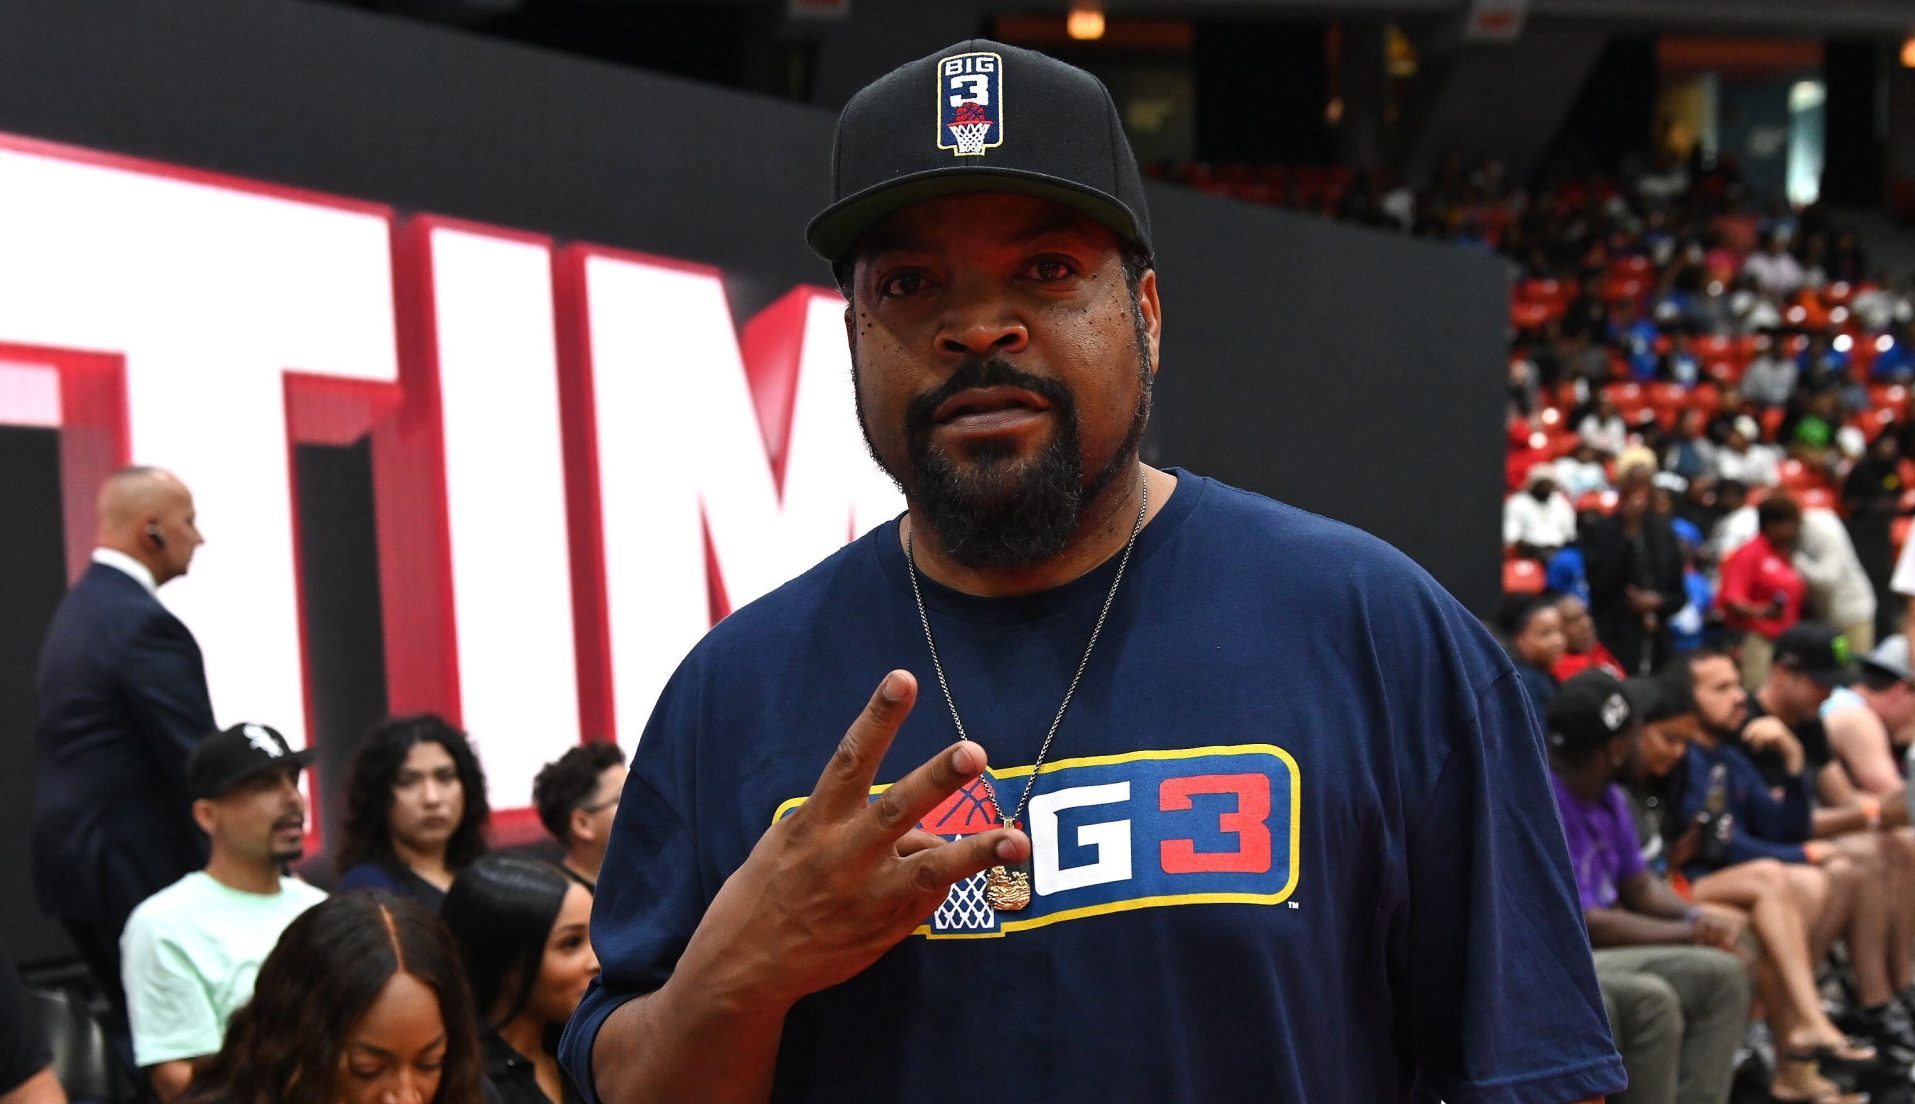 EXCLUSIVE Ice Cube NBA Big3 Media Coverage scaled e1688671876765